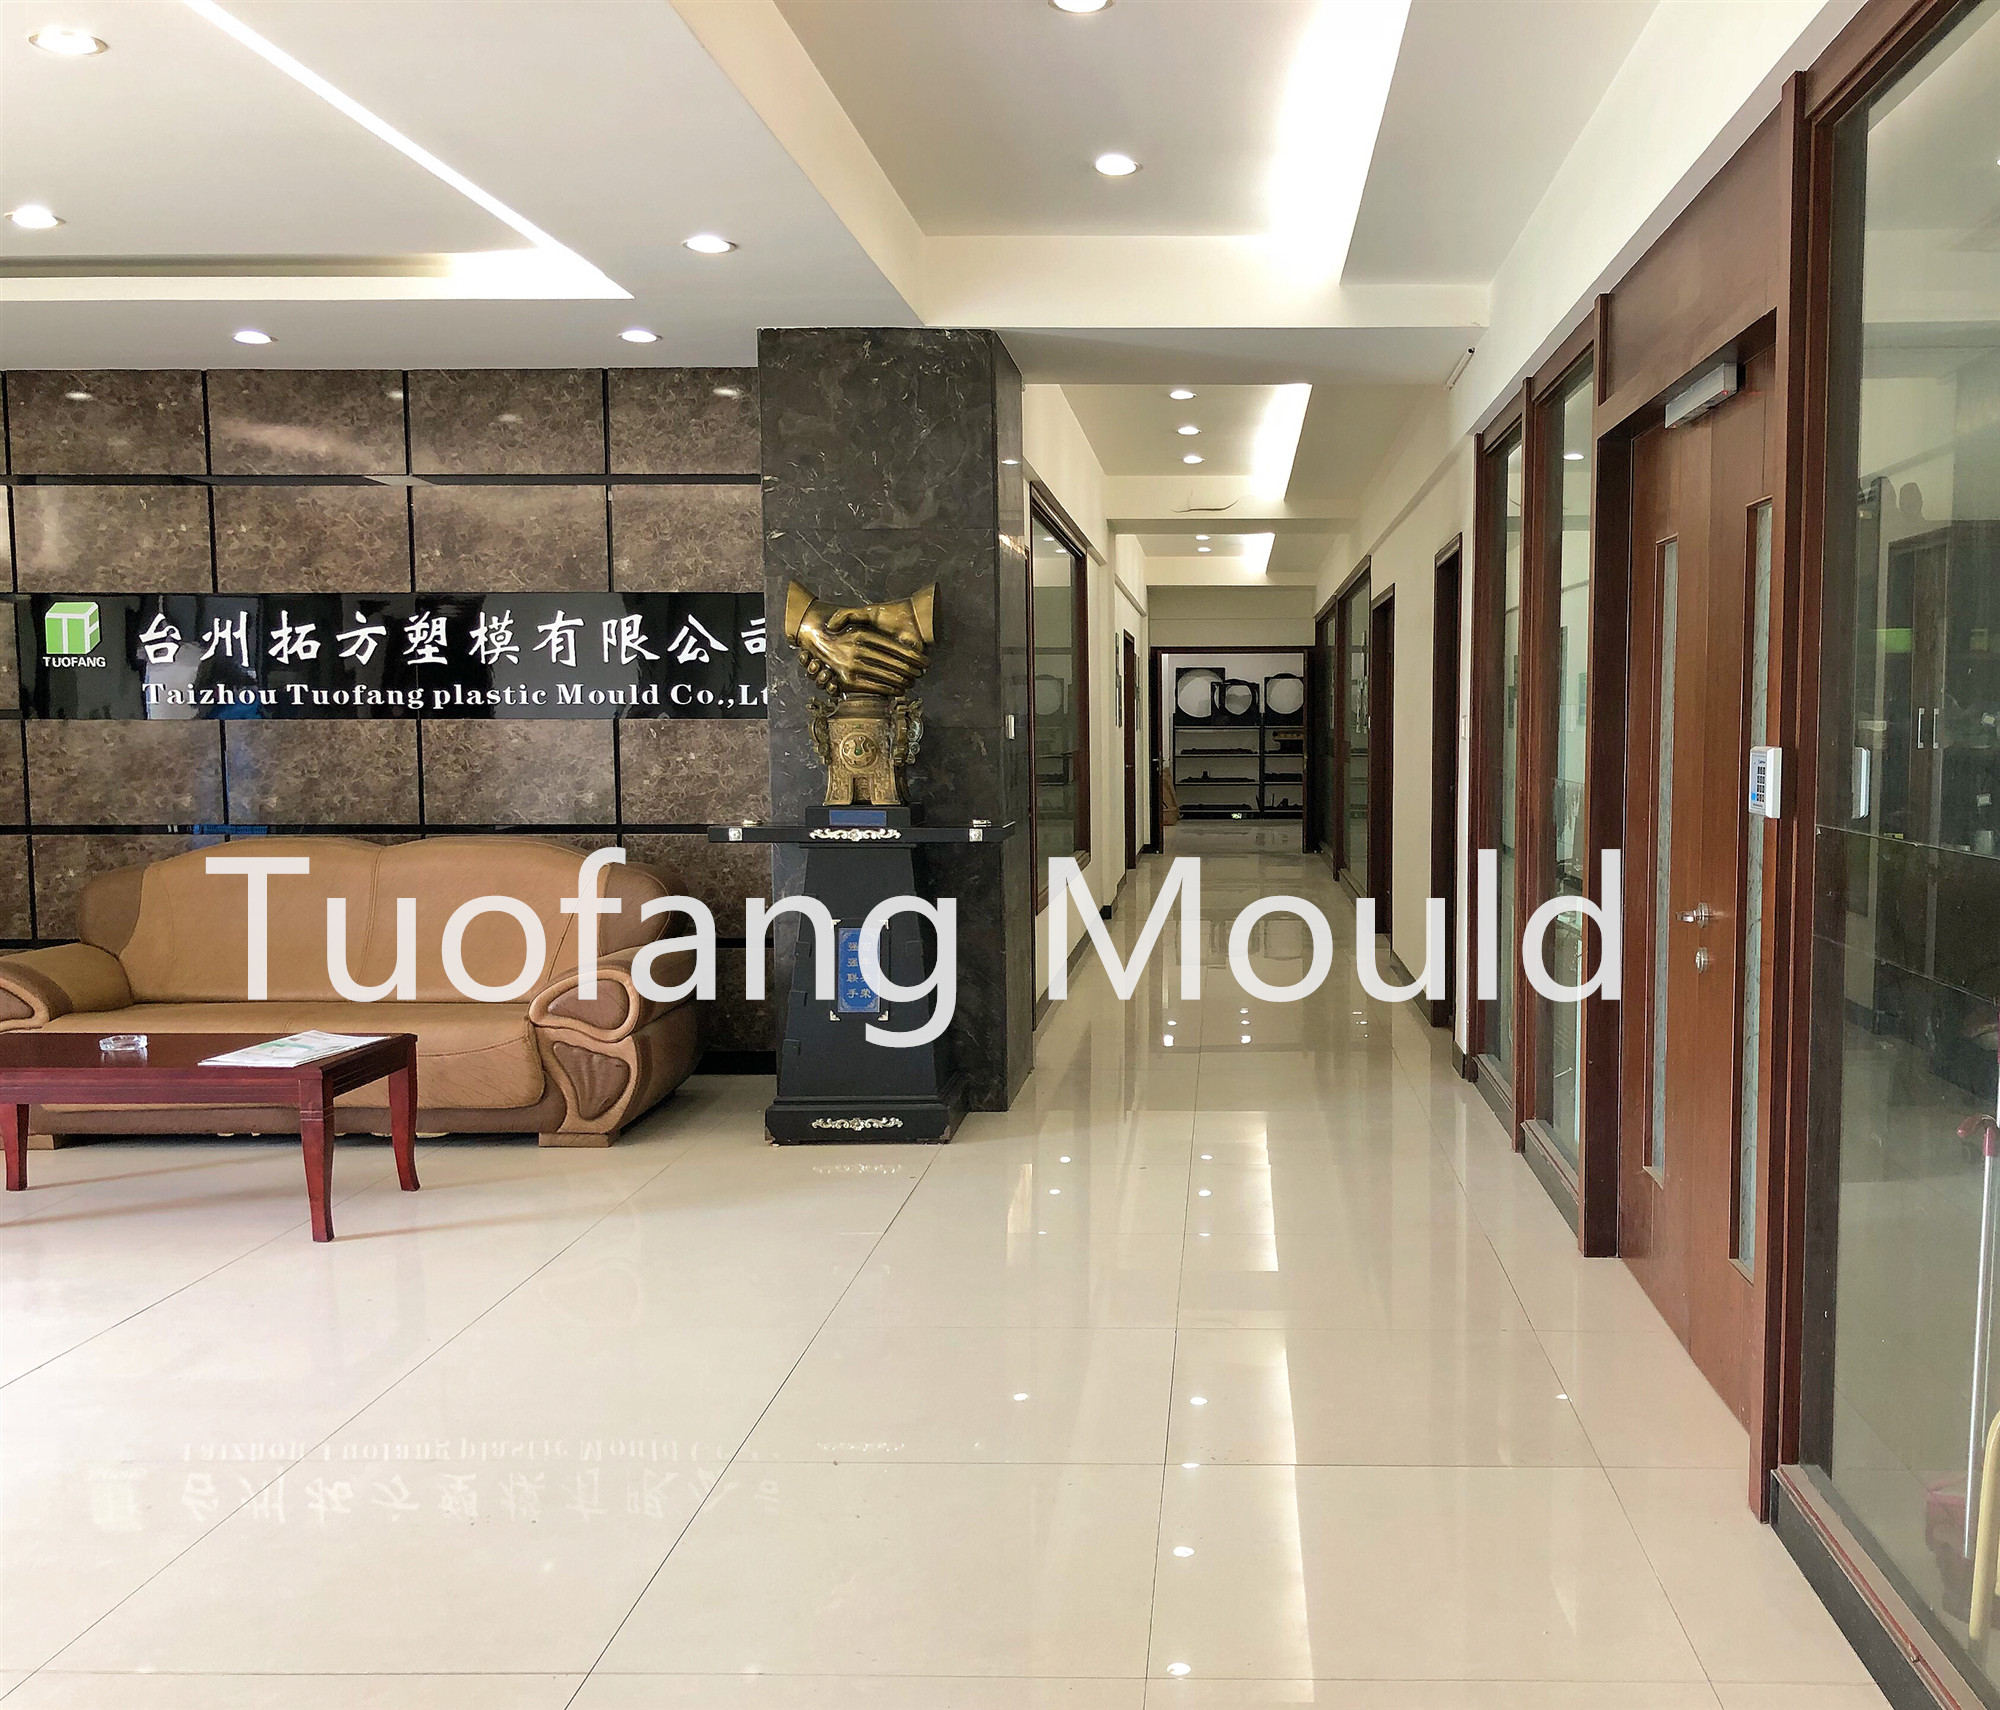 Taizhou Tuofang Plastic Mould Co.,Ltd_副本_副本.jpg